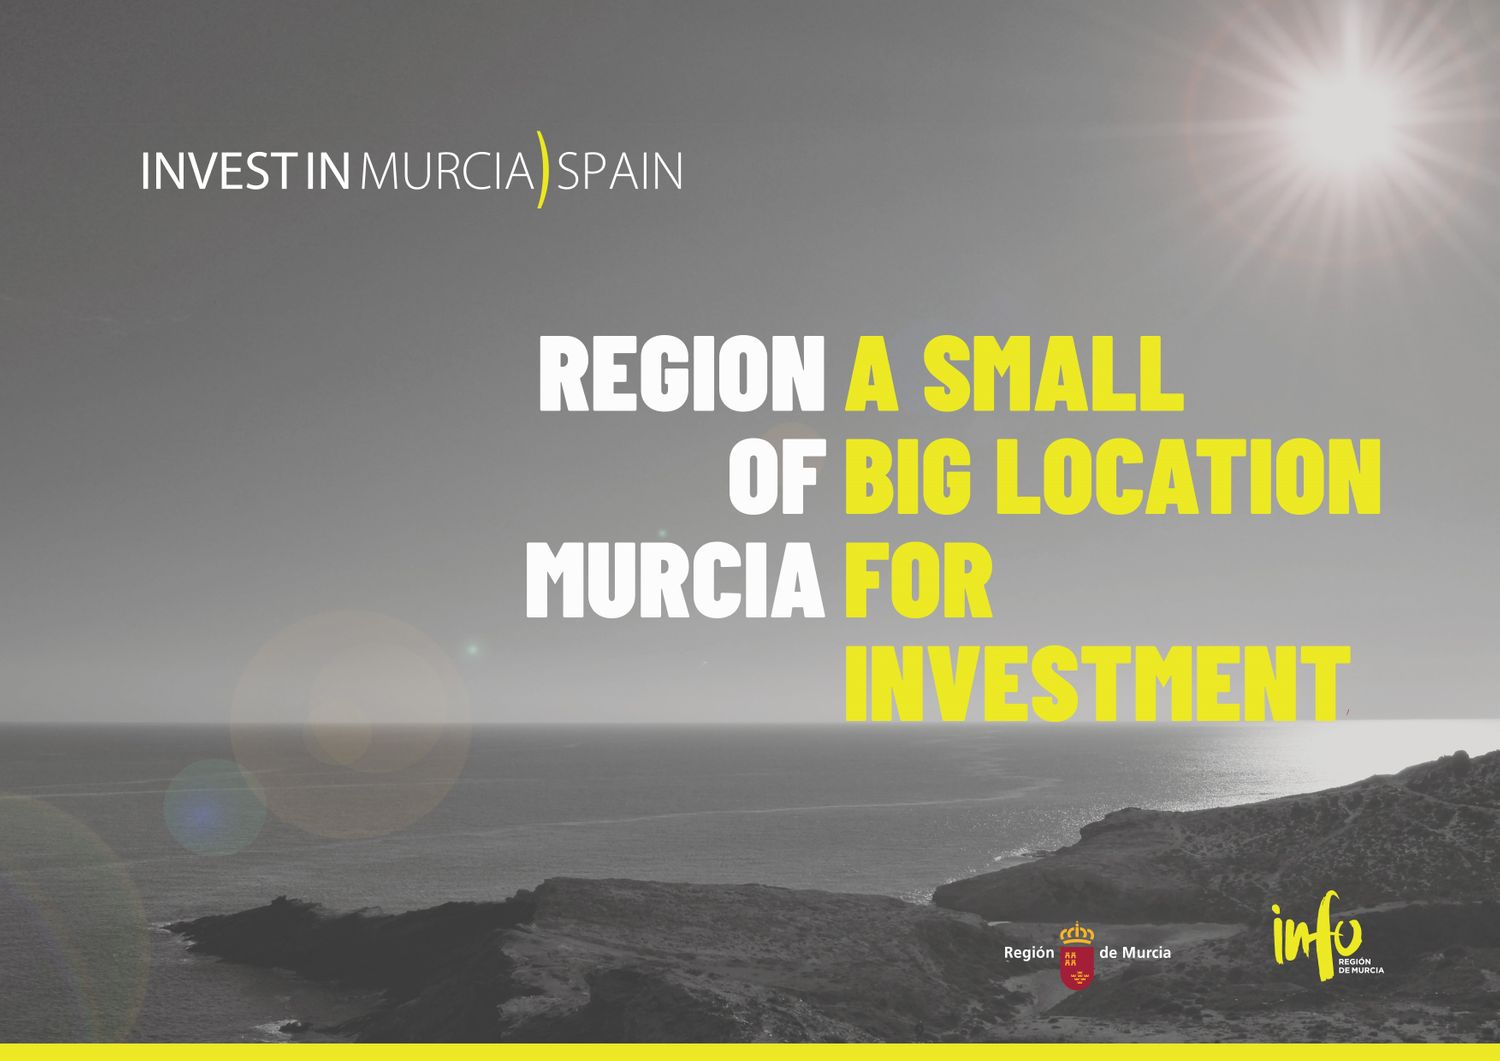 Invest in Murcia ) Spain